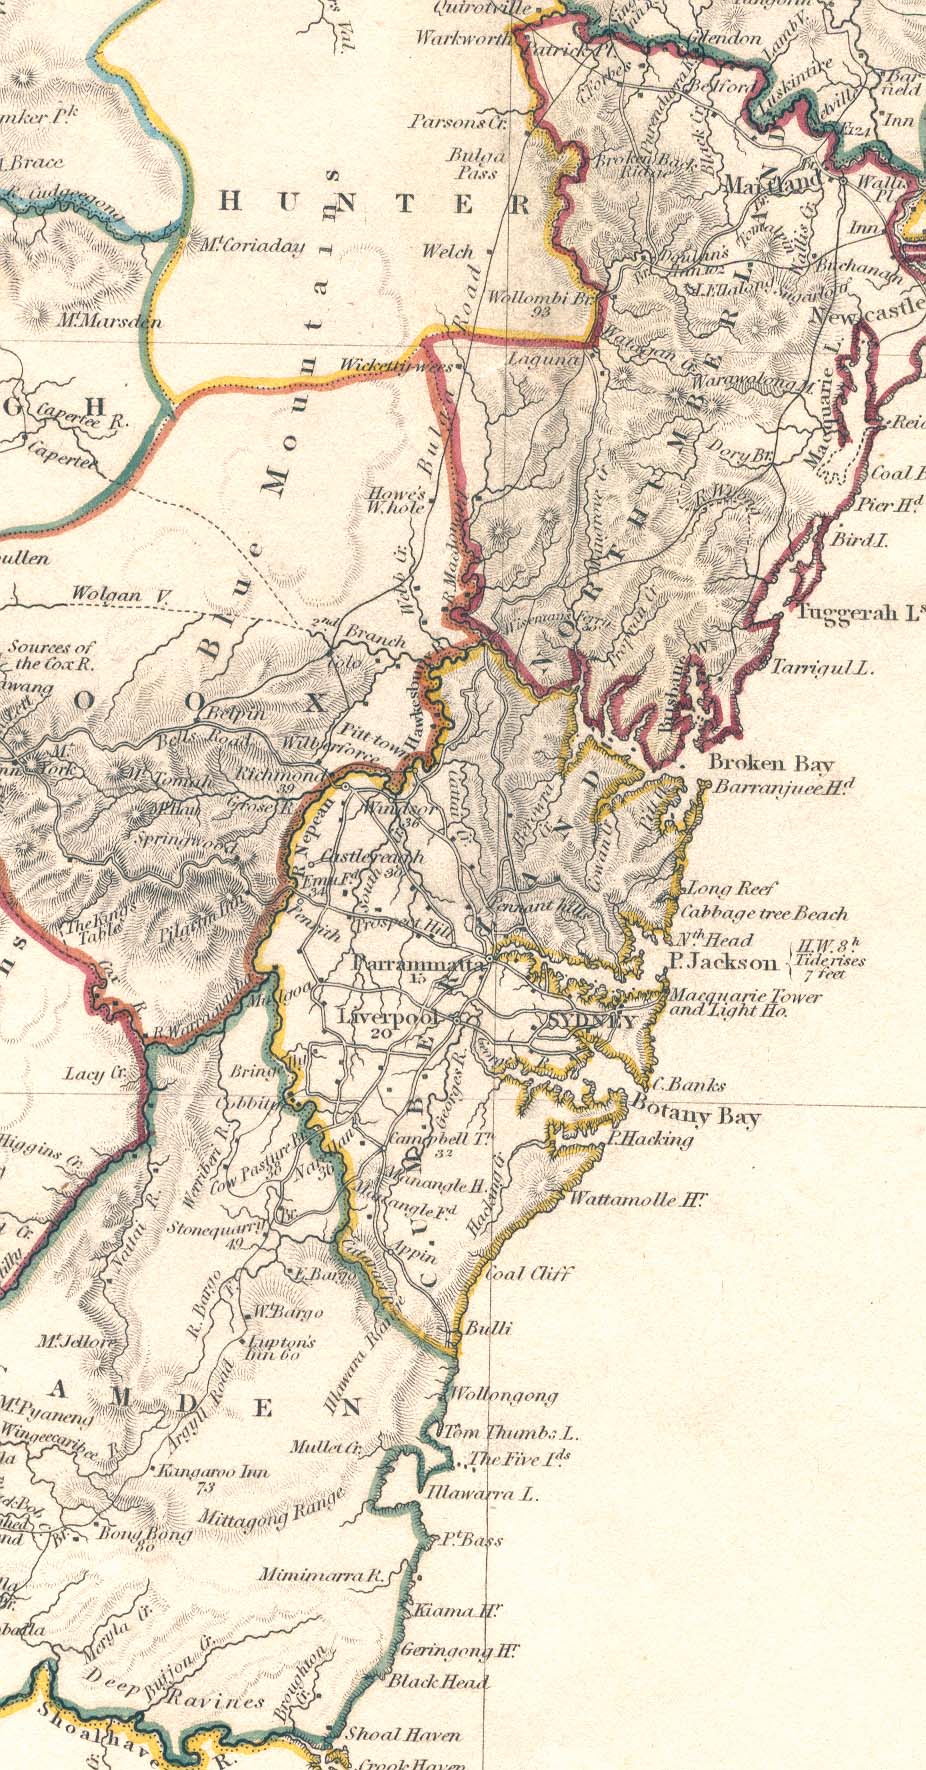 Sydney, 1833